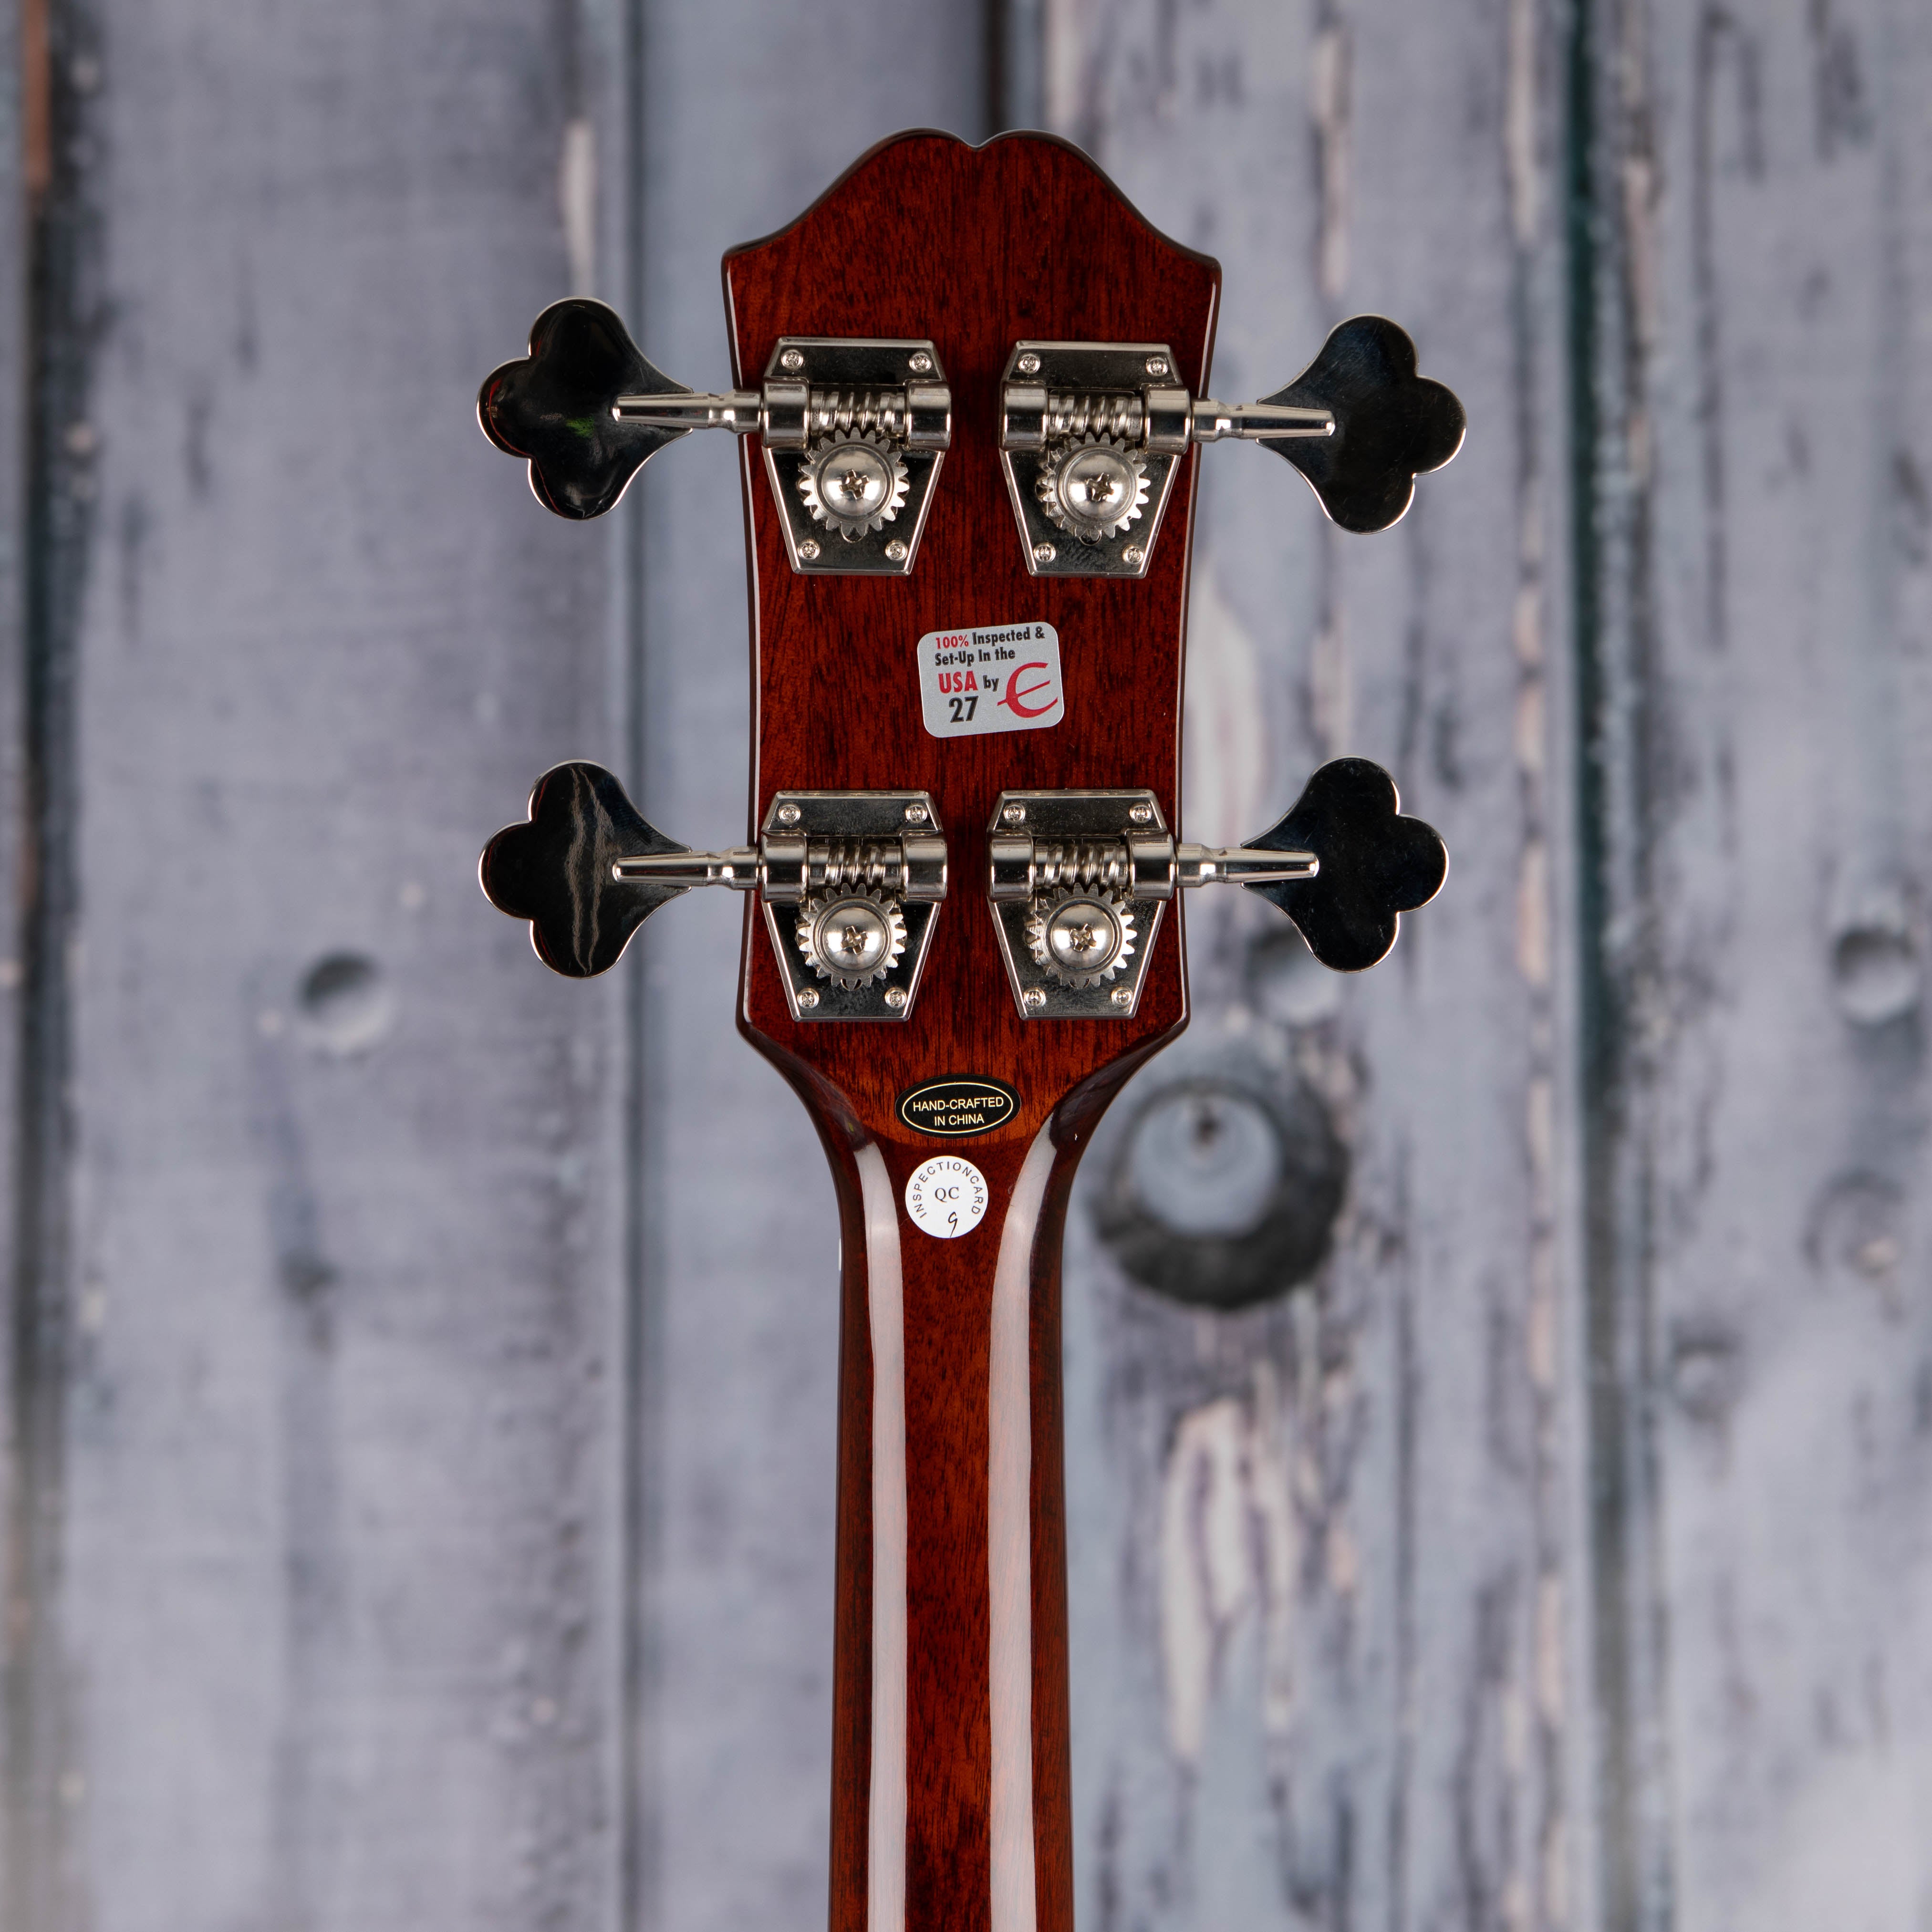 Epiphone Jack Casady Semi-Hollowbody Bass Guitar, Sparkling Burgundy, back headstock